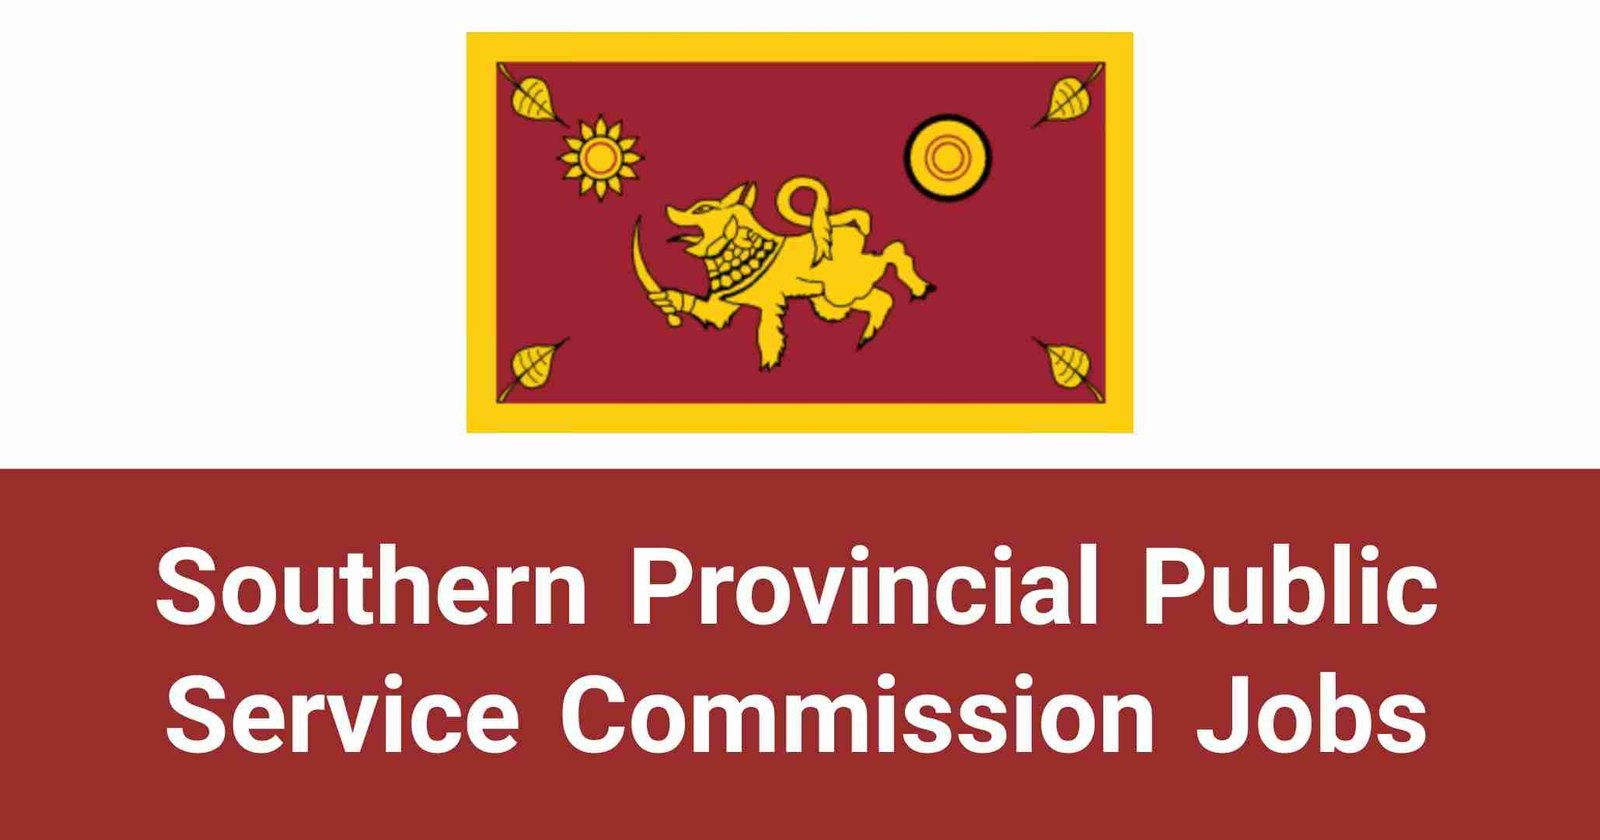 Southern Provincial Public Service Commission Jobs Vacancies